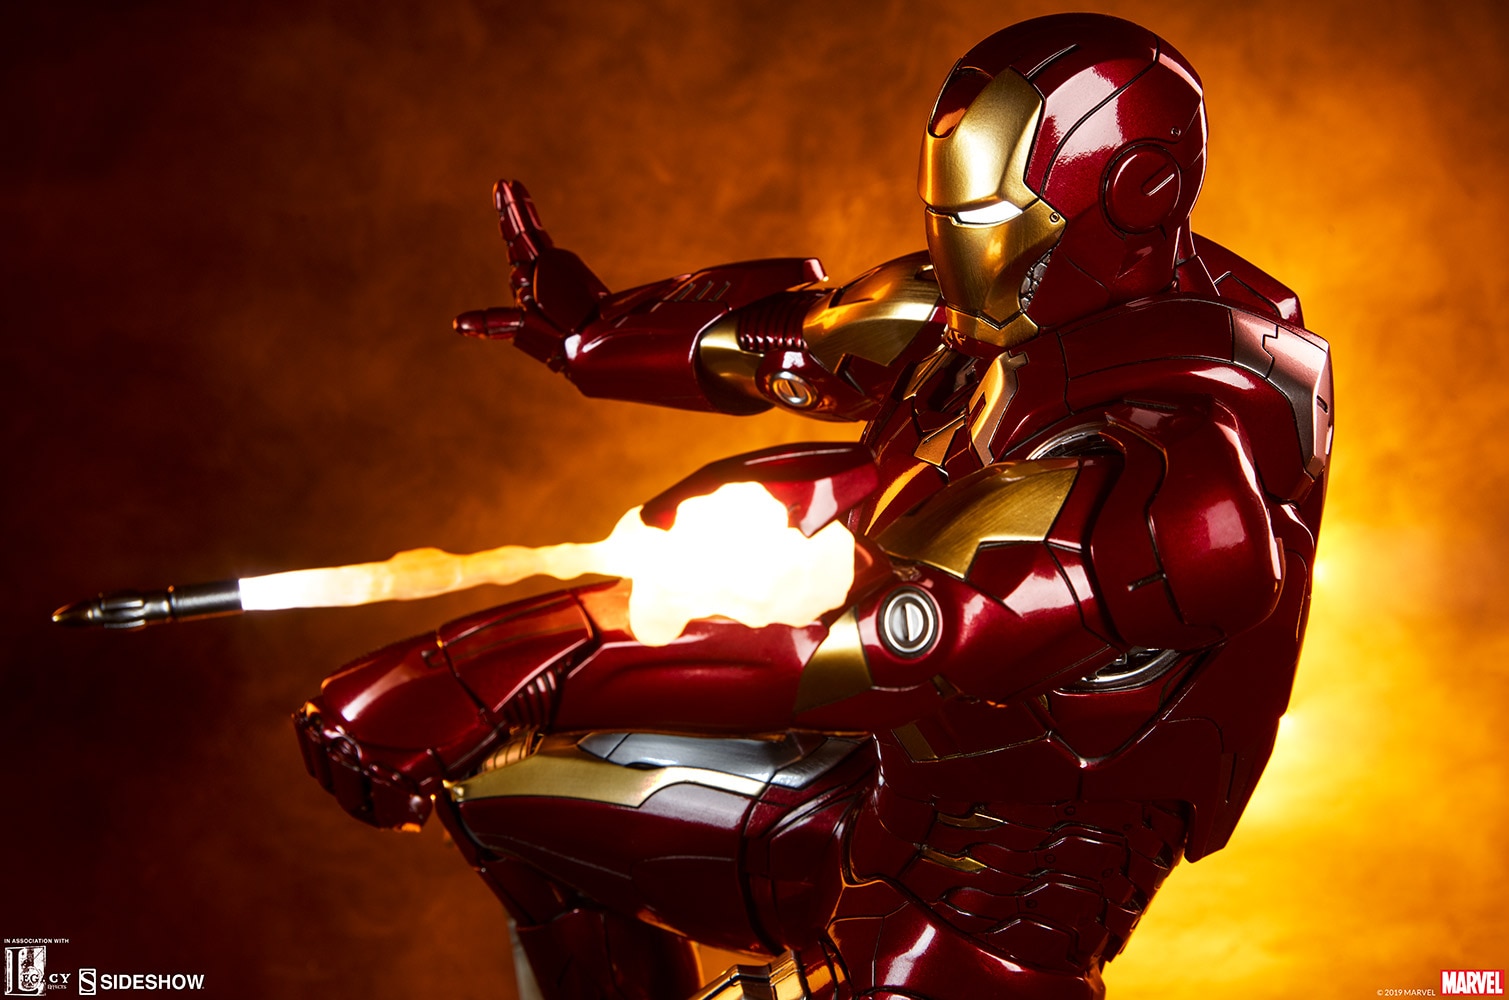 Sideshow Iron Man Mark VII Maquette Statue Photos & Order Info! - Marvel Toy News1509 x 1000